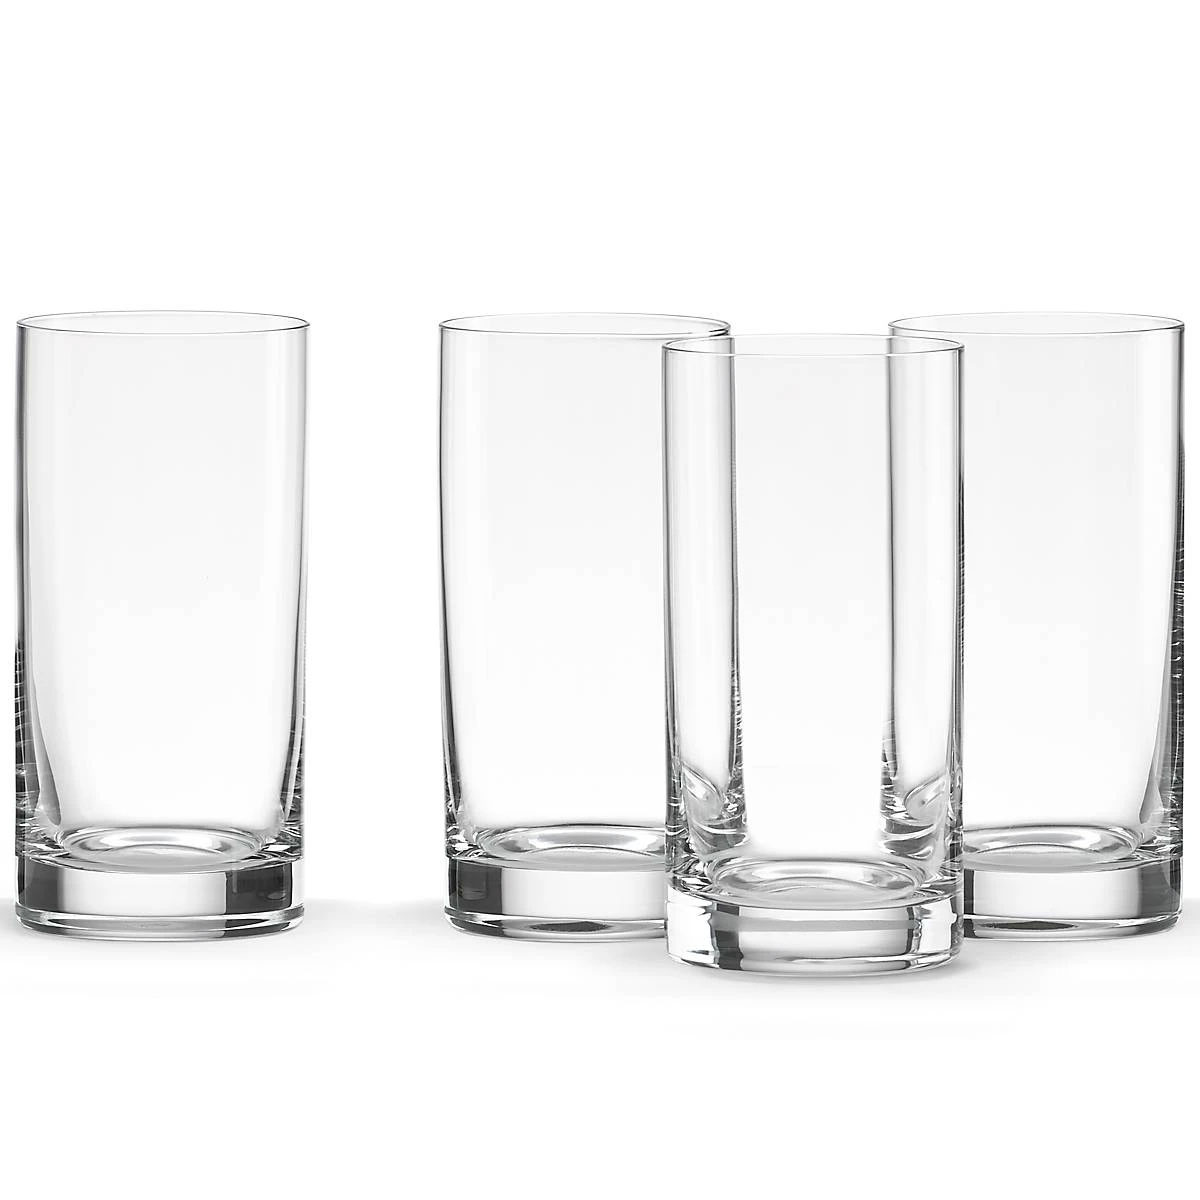 Lenox Tuscany Classics, Hiball Glasses, Set of 4